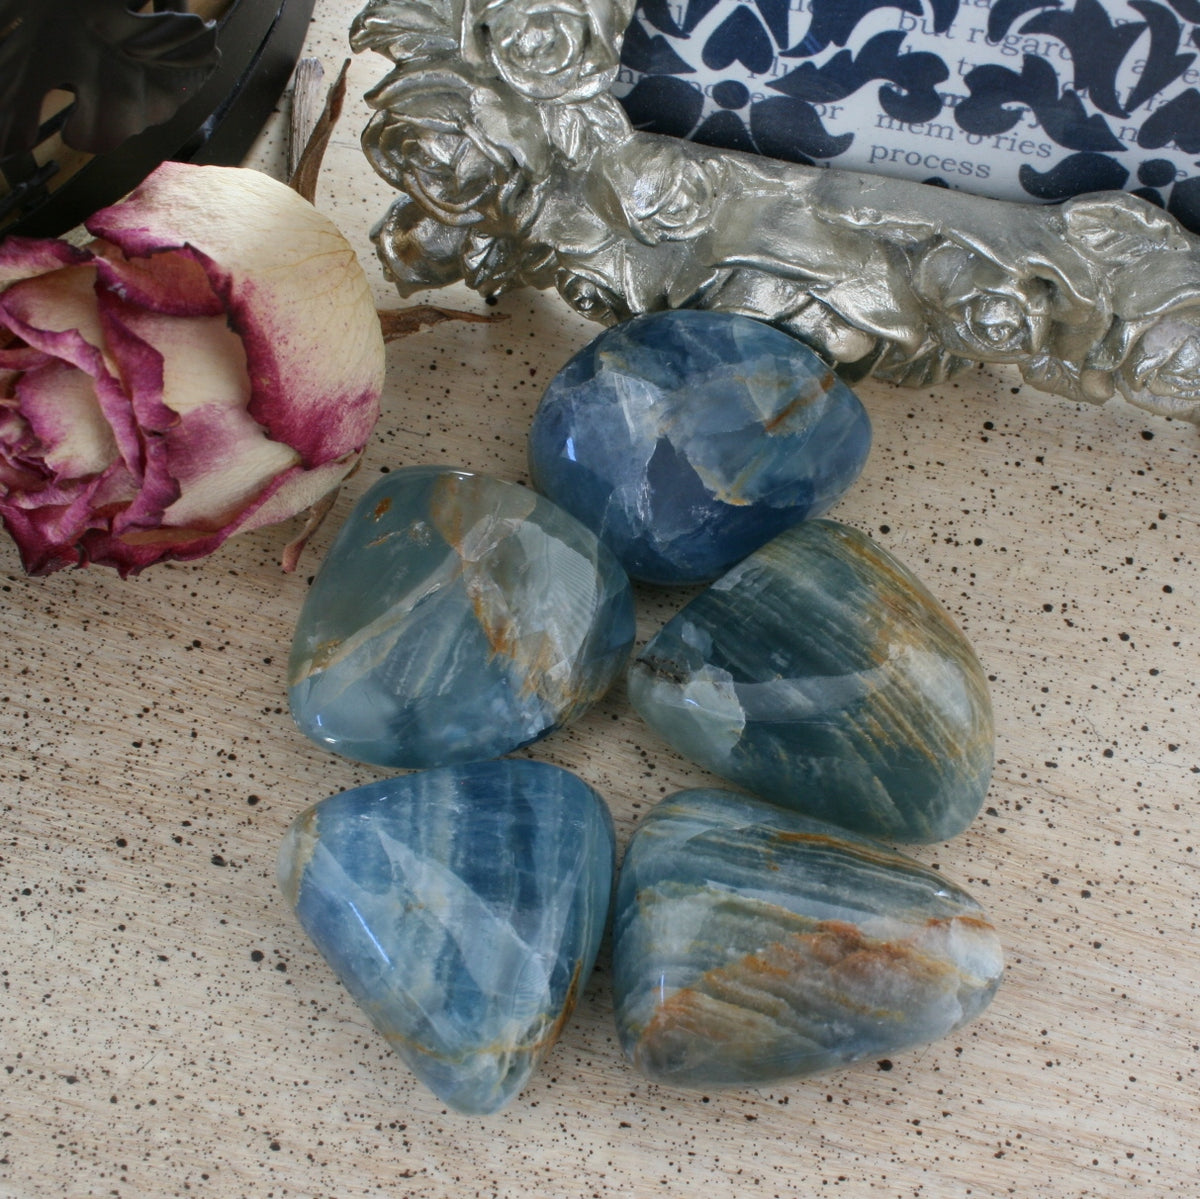 Blue Calcite / Blue Onyx Tumbled Stone from Argentina, also called Lemurian Aquatine Calcite, TUM4